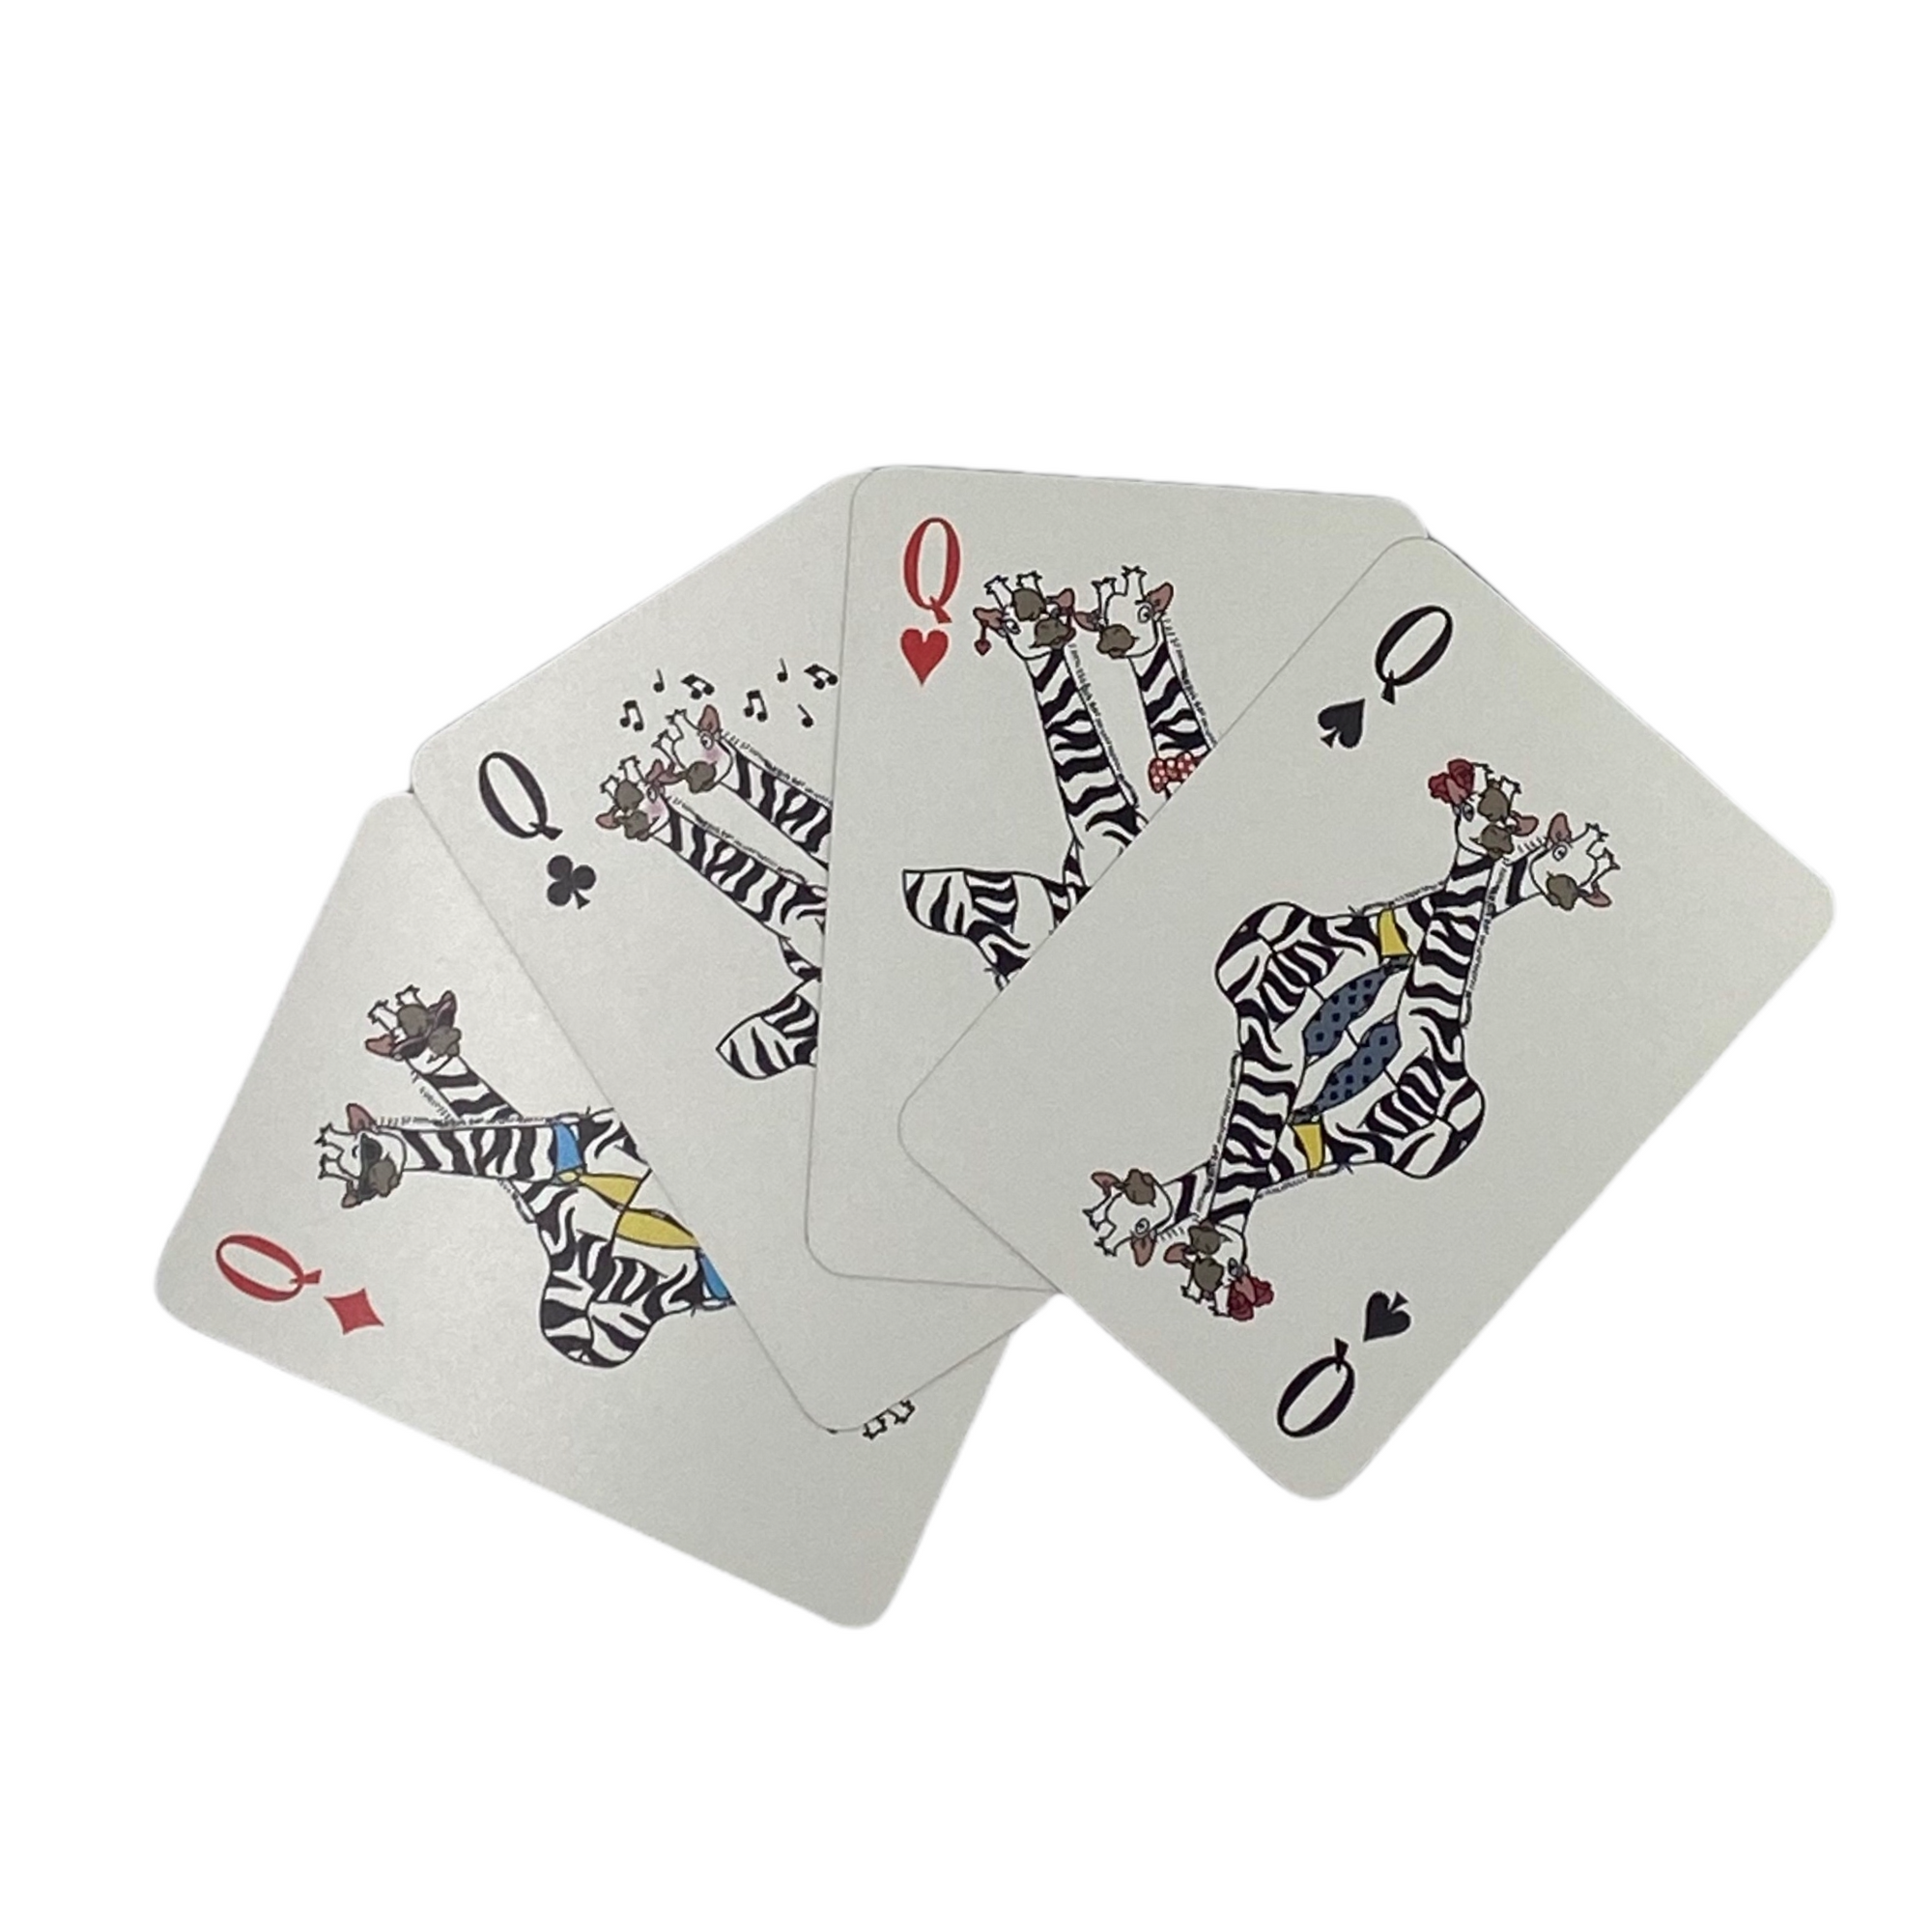 MR LUSH Playing Cards